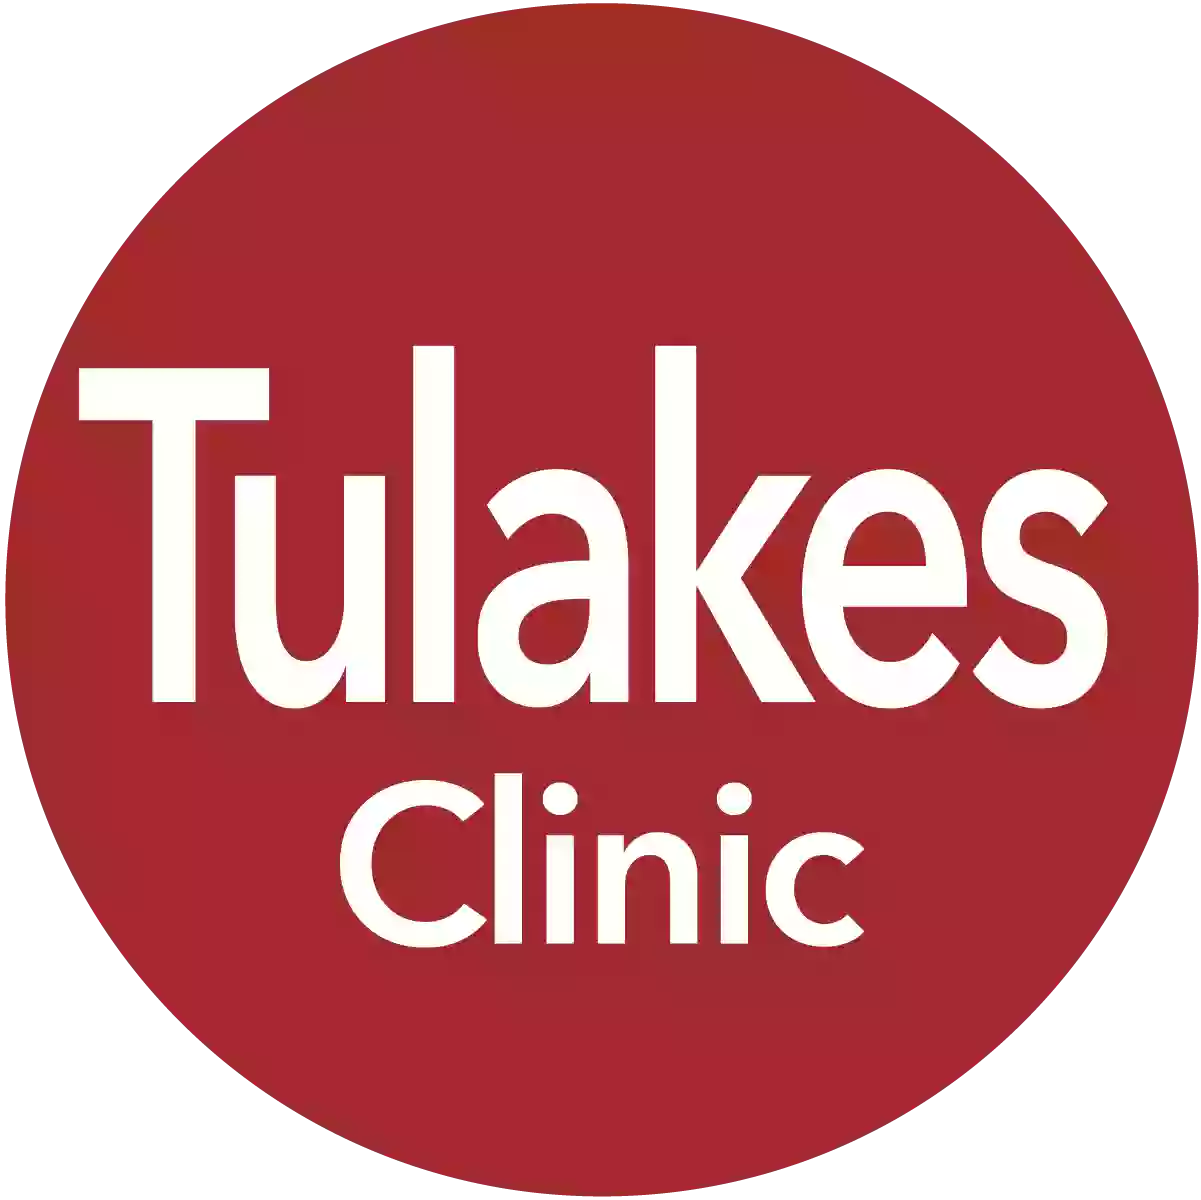 Tulakes Clinic